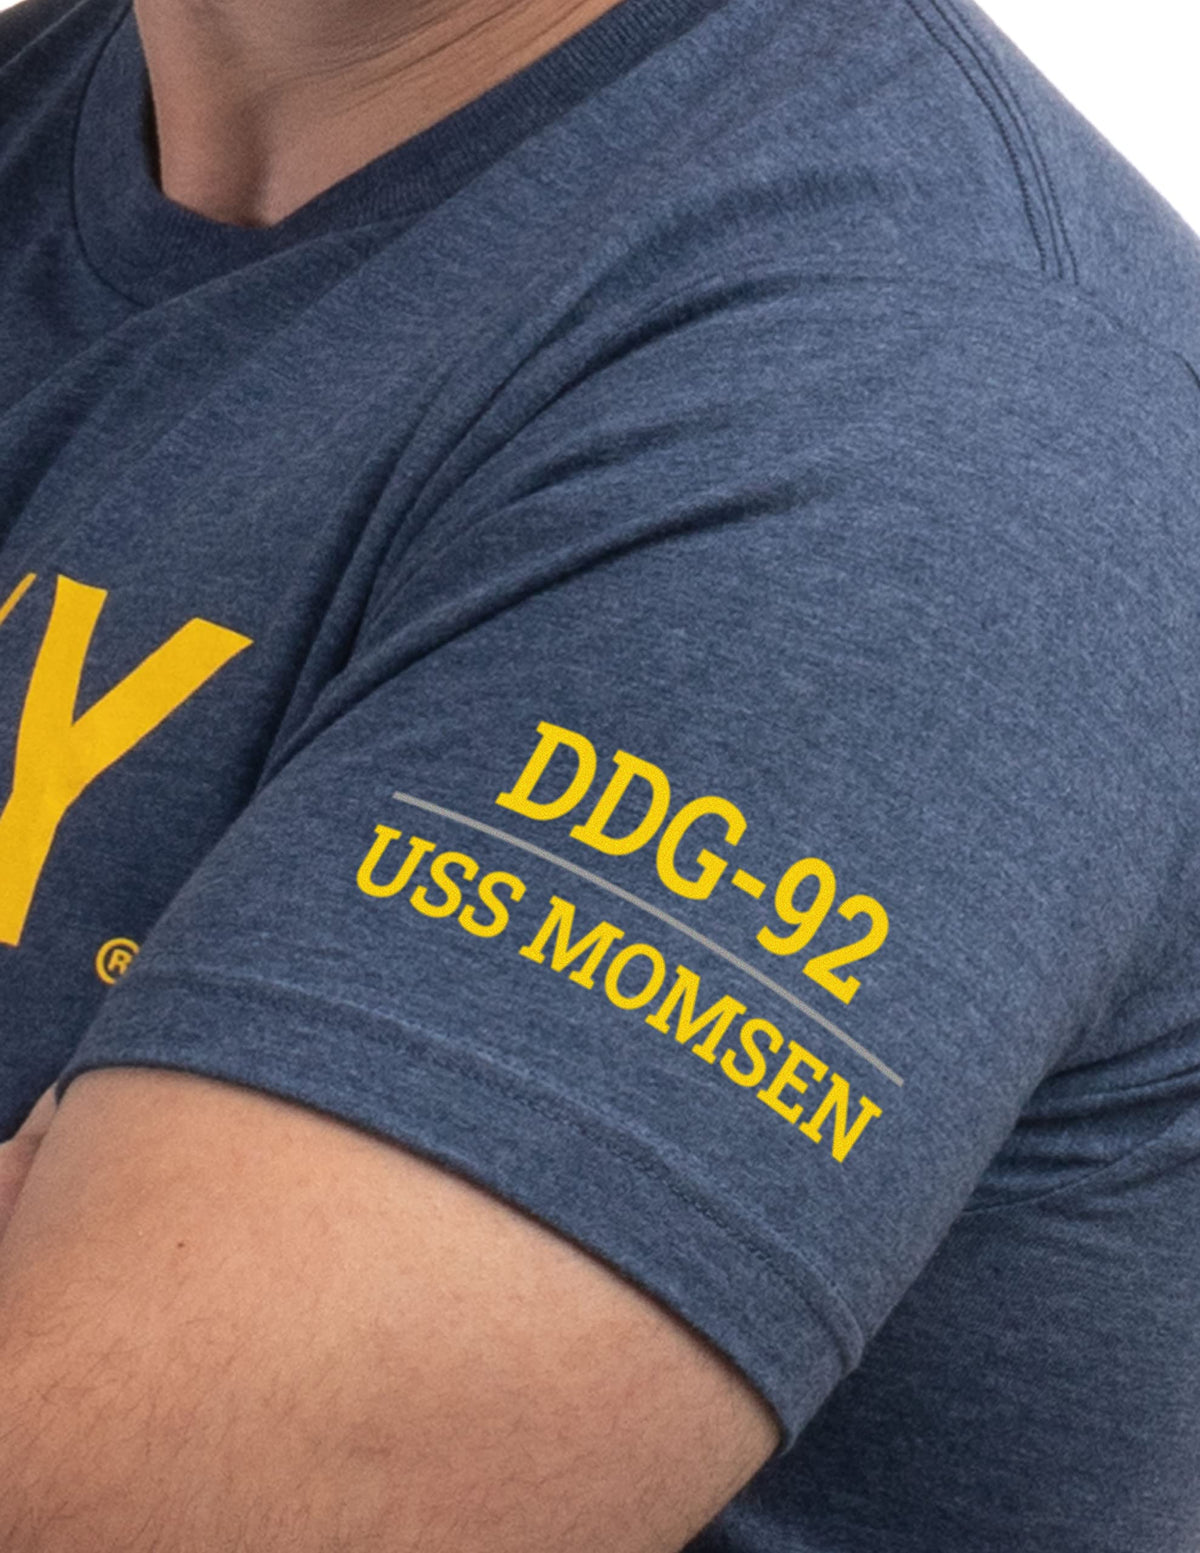 USS Momsen, DDG-92 | U.S. Navy Sailor Veteran USN United States Naval T-shirt for Men Women